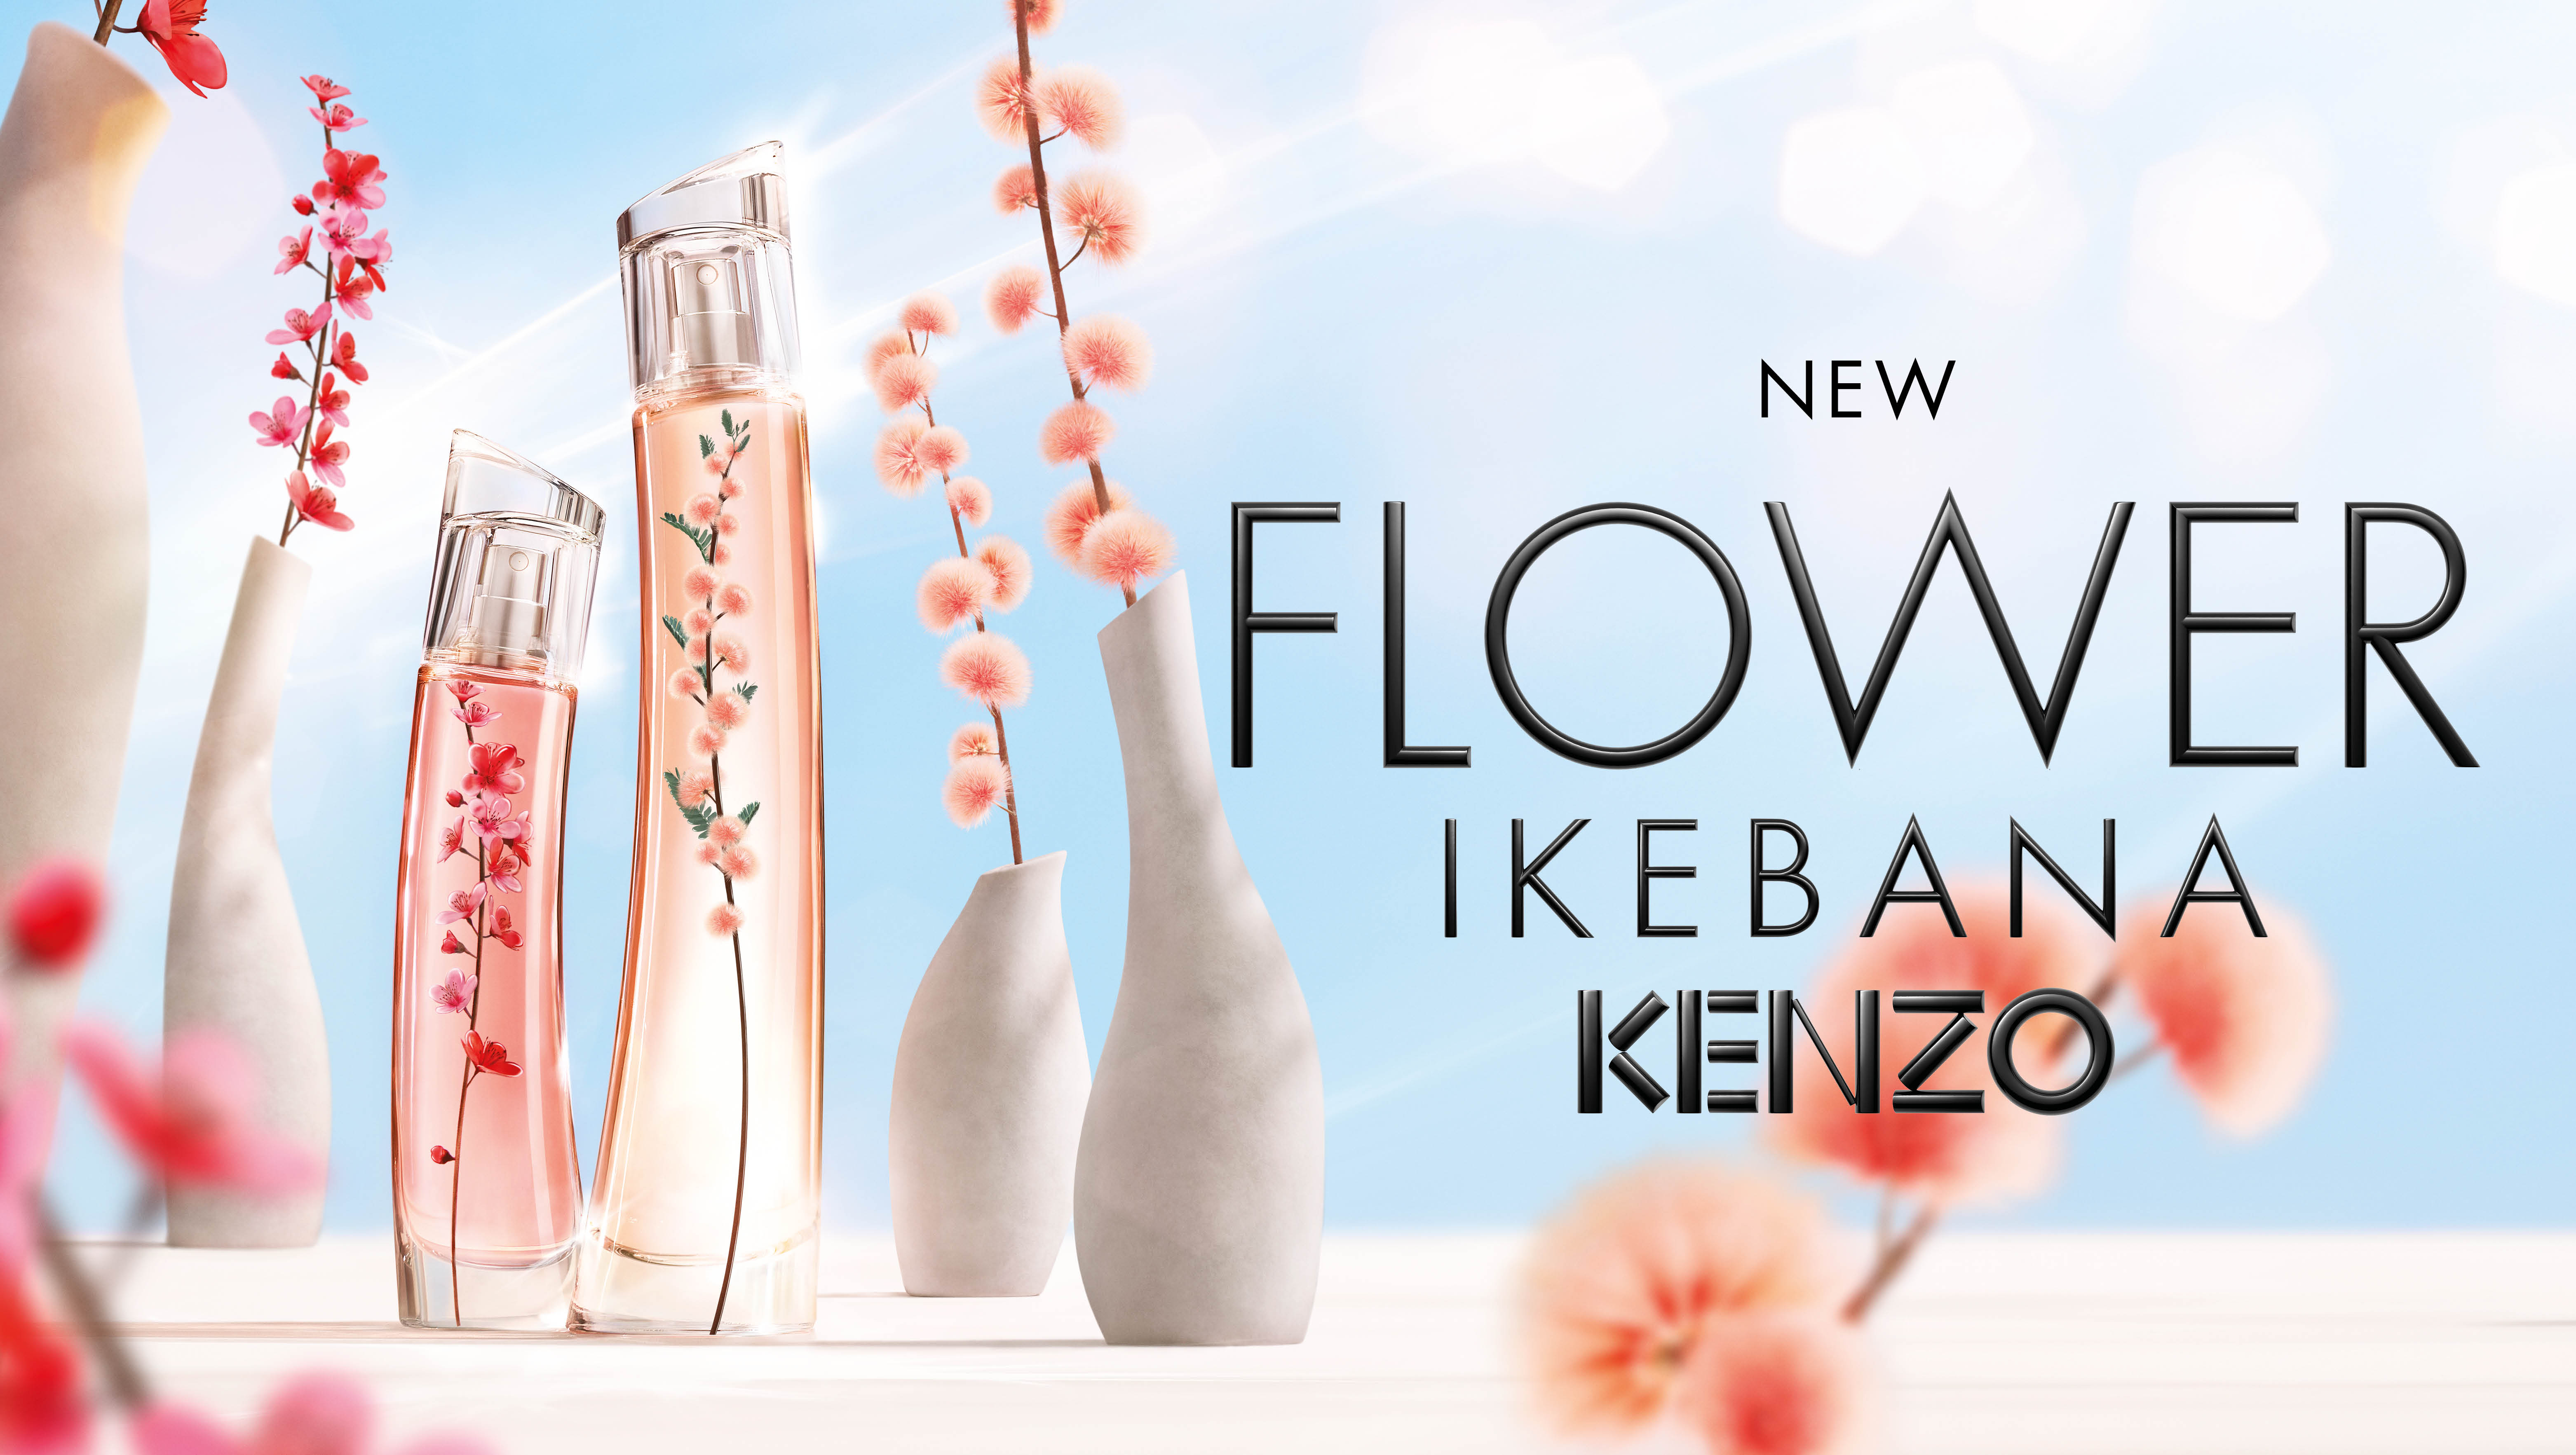 Kenzo: Το νέο άρωμα της συλλογής Flower By Kenzo, Ikebana Mimosa, έρχεται να ζεστάνει τις αισθήσεις μας